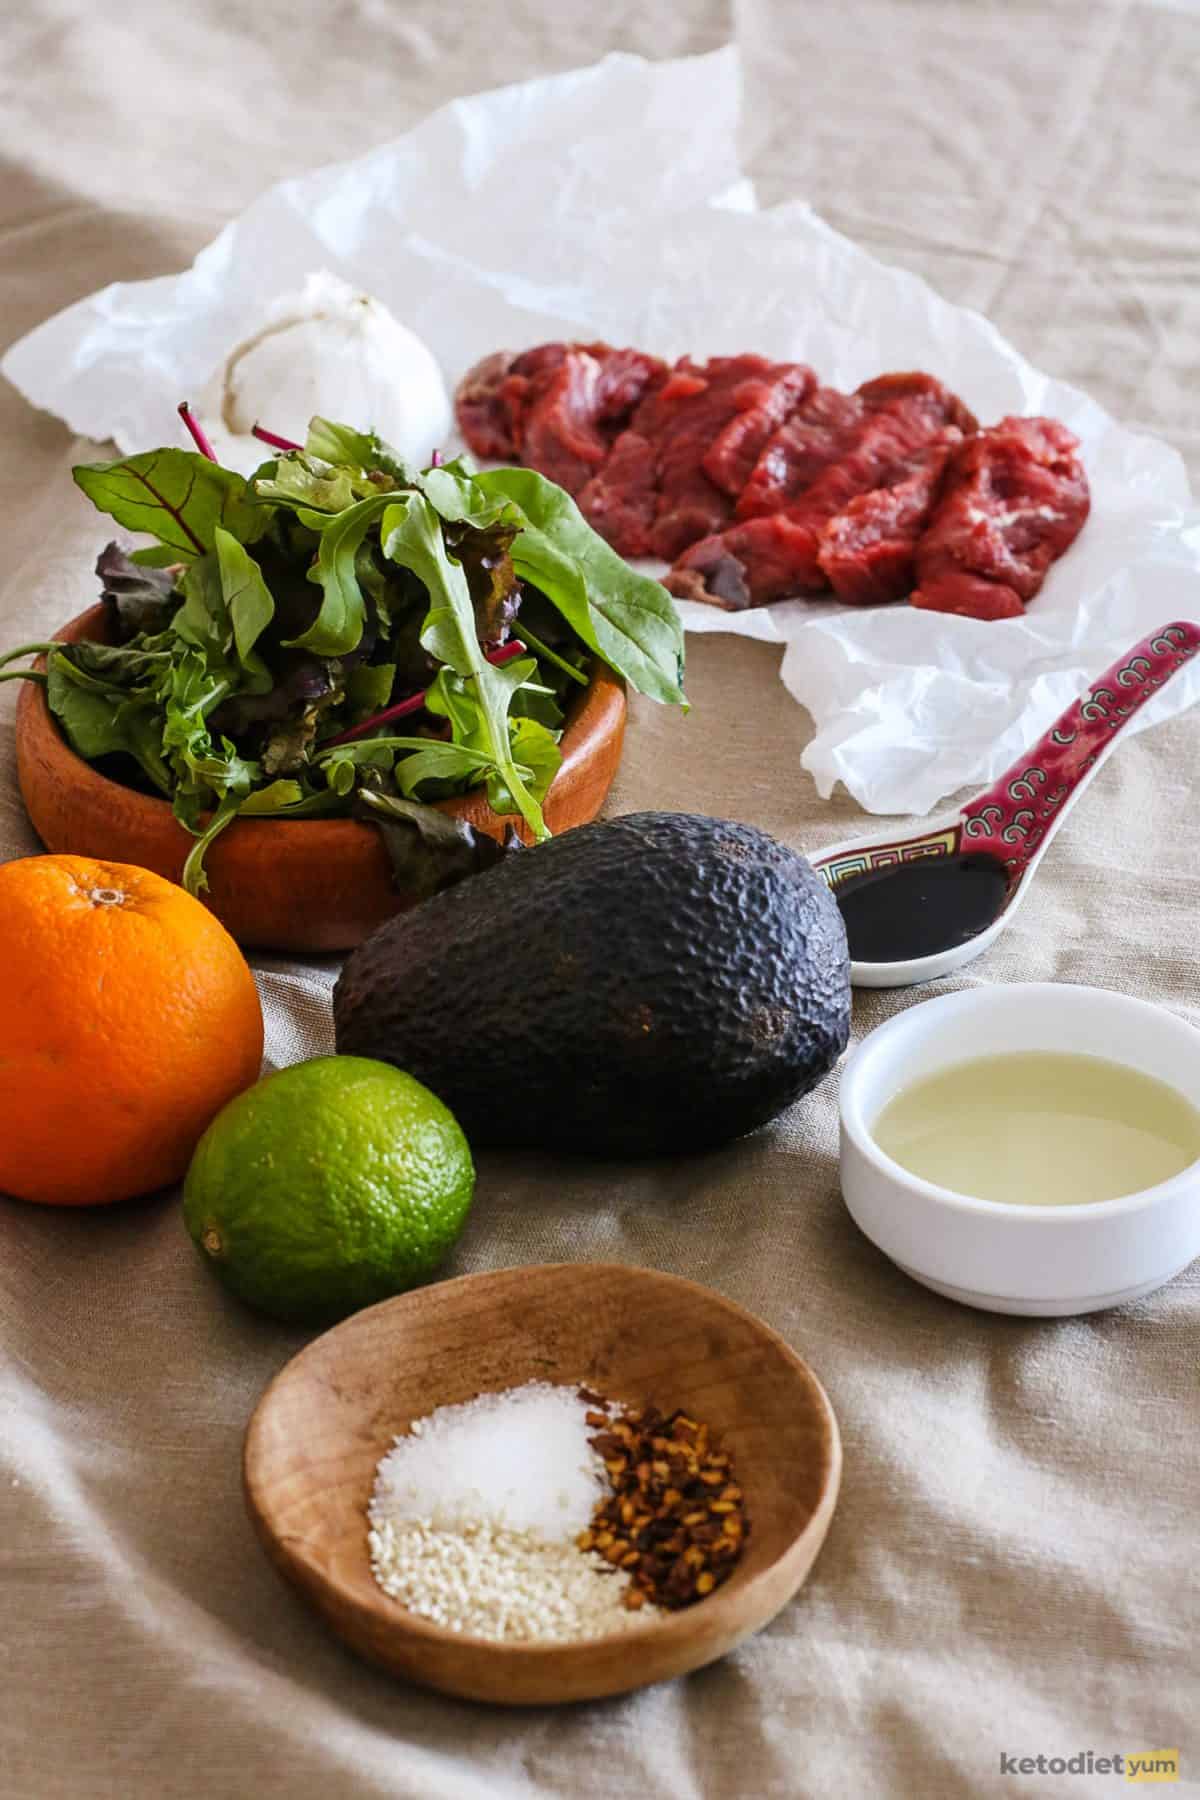 Ingredients arranged on a table to make a keto Korean BBQ Steak Salad